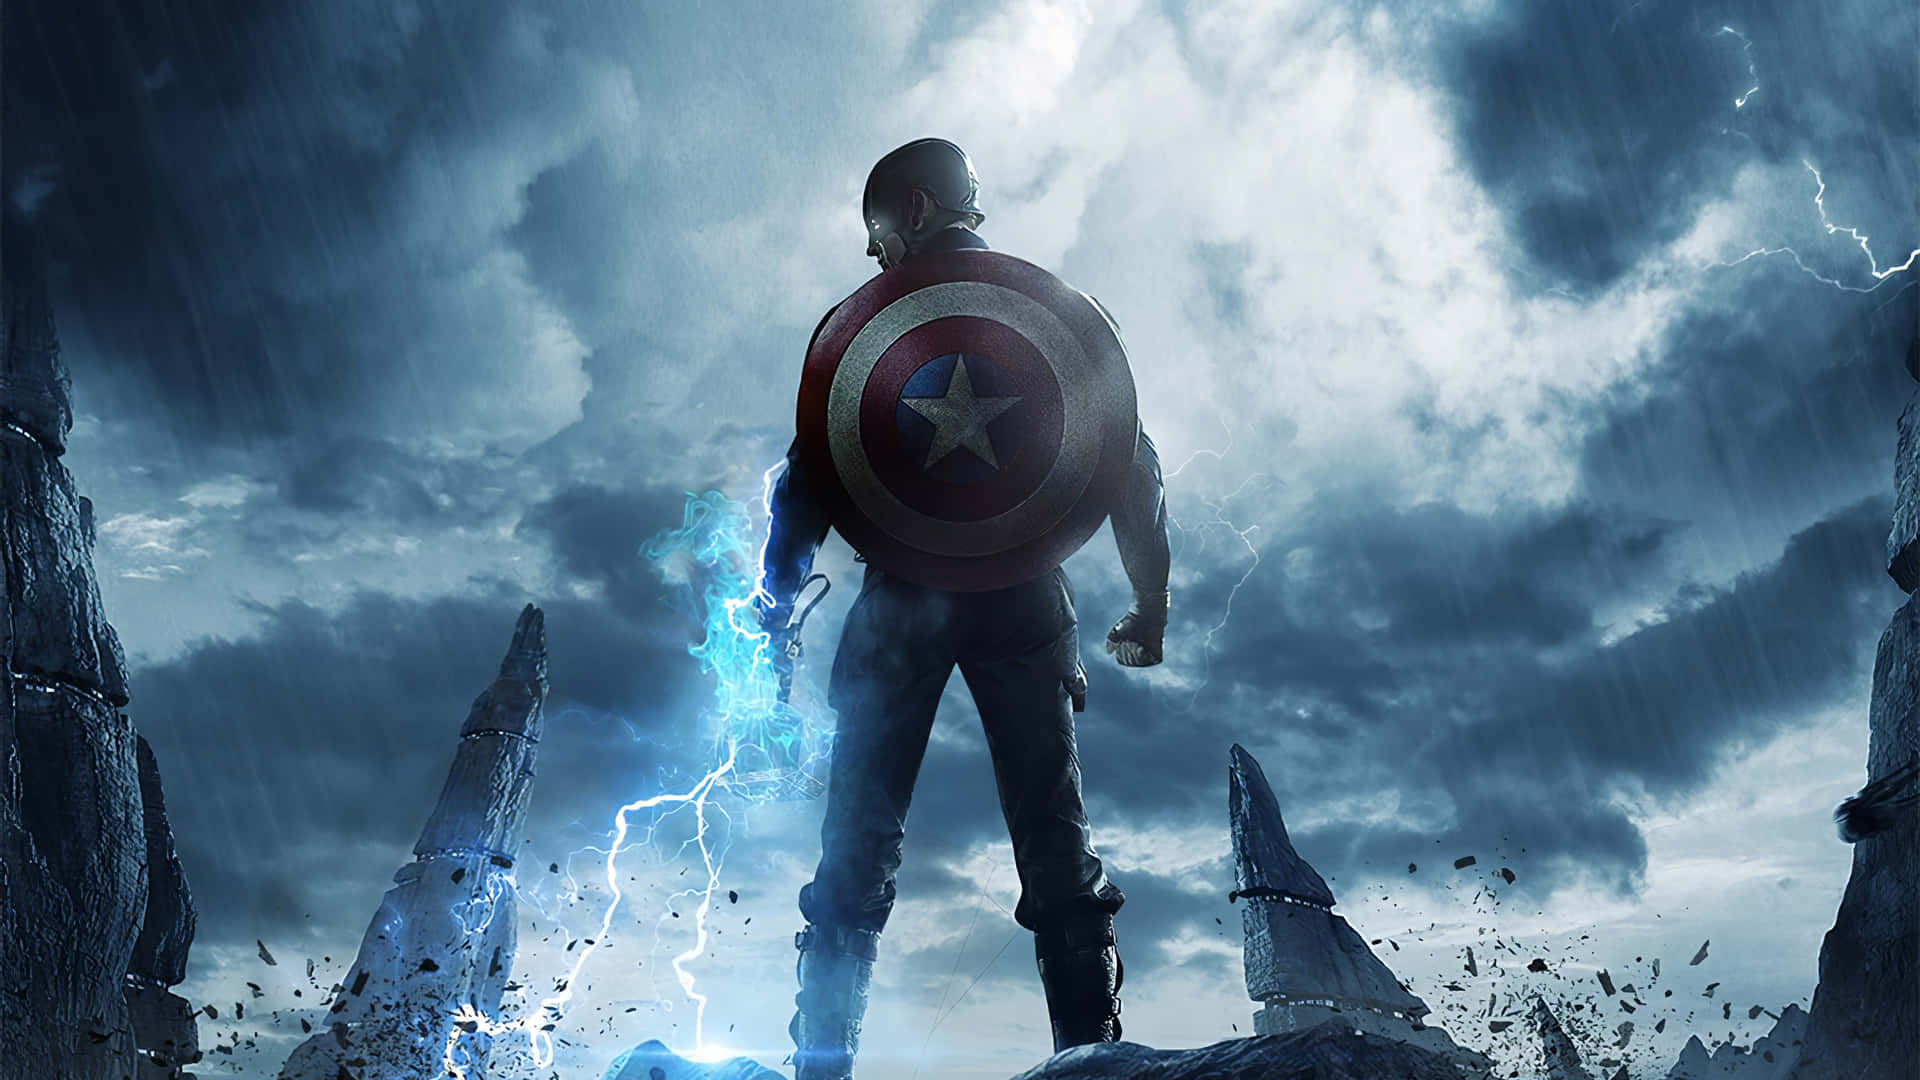 Den Powered Protector - 4K Captain America Standing Tall oprettelseer en beroligende atmosfære. Wallpaper